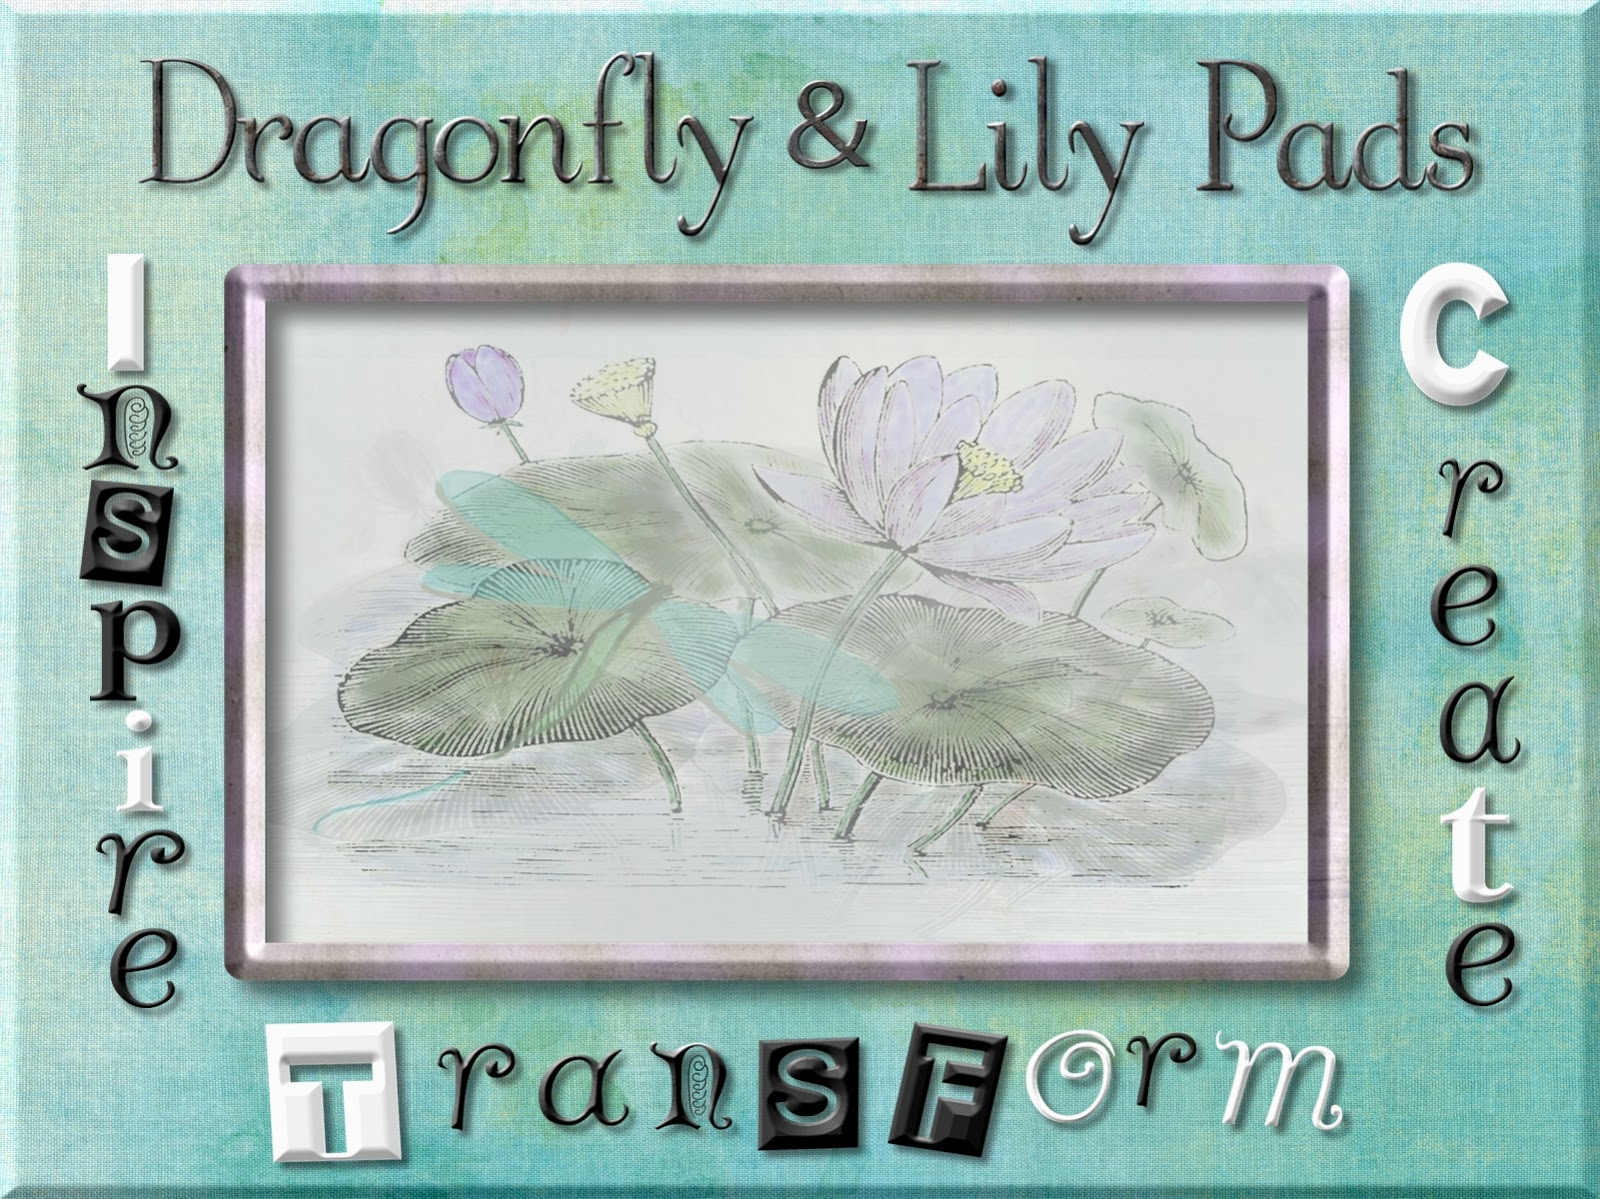 http://dragonflyandlilypads.blogspot.com/